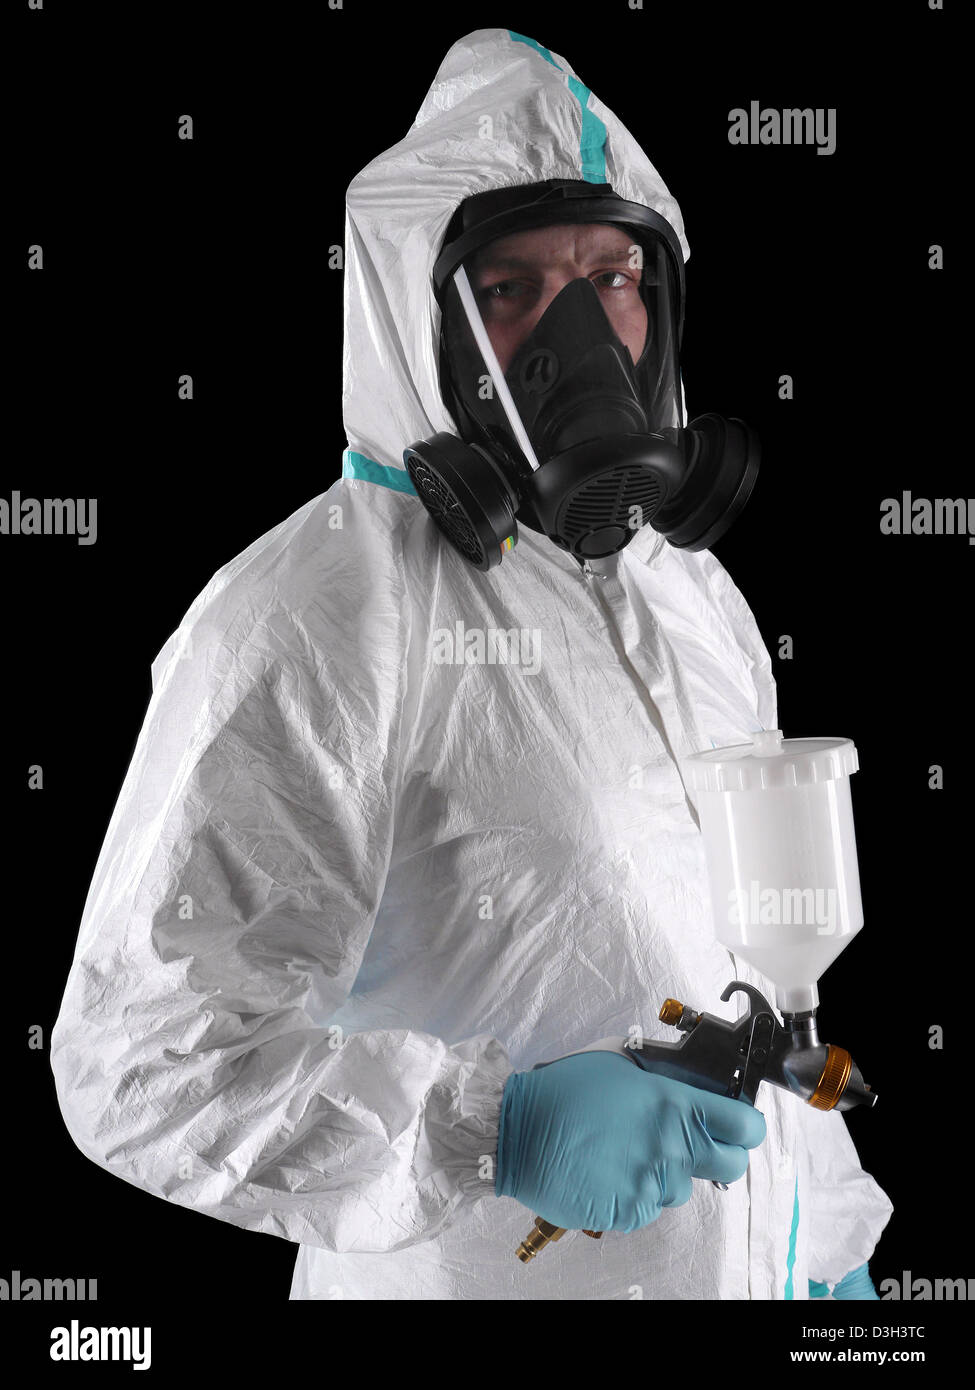 Spray painter wearing white coverall, respirator and spray gun shot over black background Stock Photo